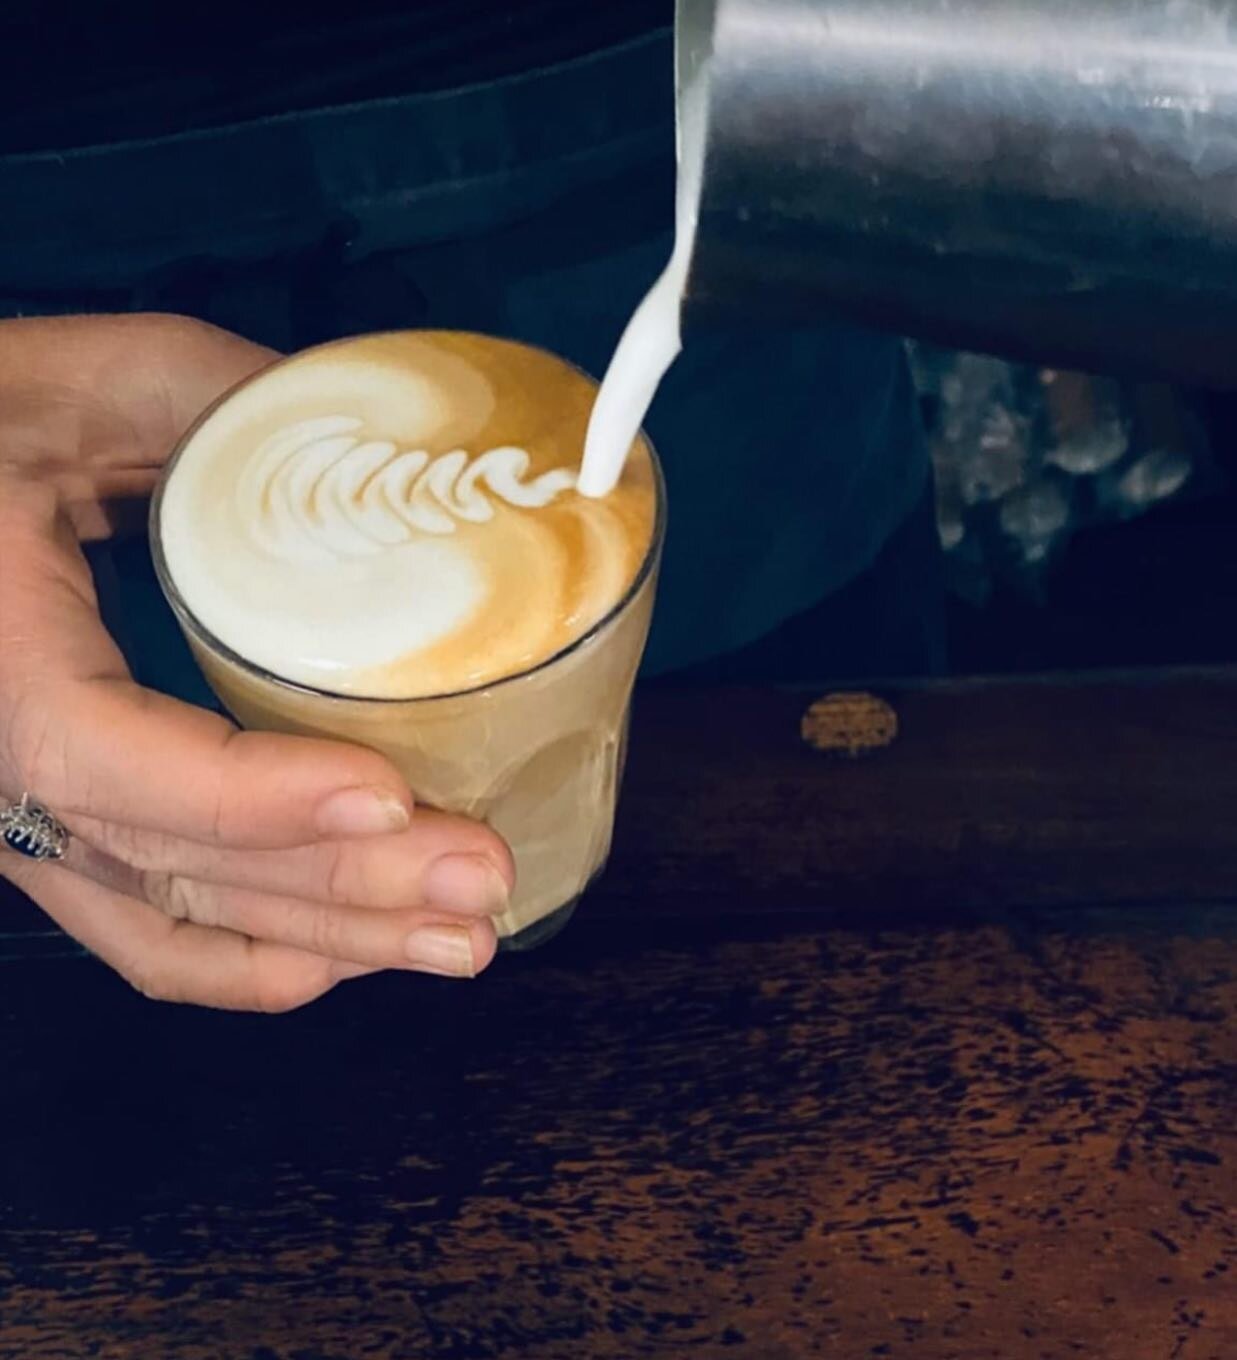 Flick of the wrist to complete the fern! 
.
.
.
.
.
#coffeeaddict #latteart #barista #coffeelover #coffeeart #fern #coffeetime #coffeecupsoftheworld #coffeecups